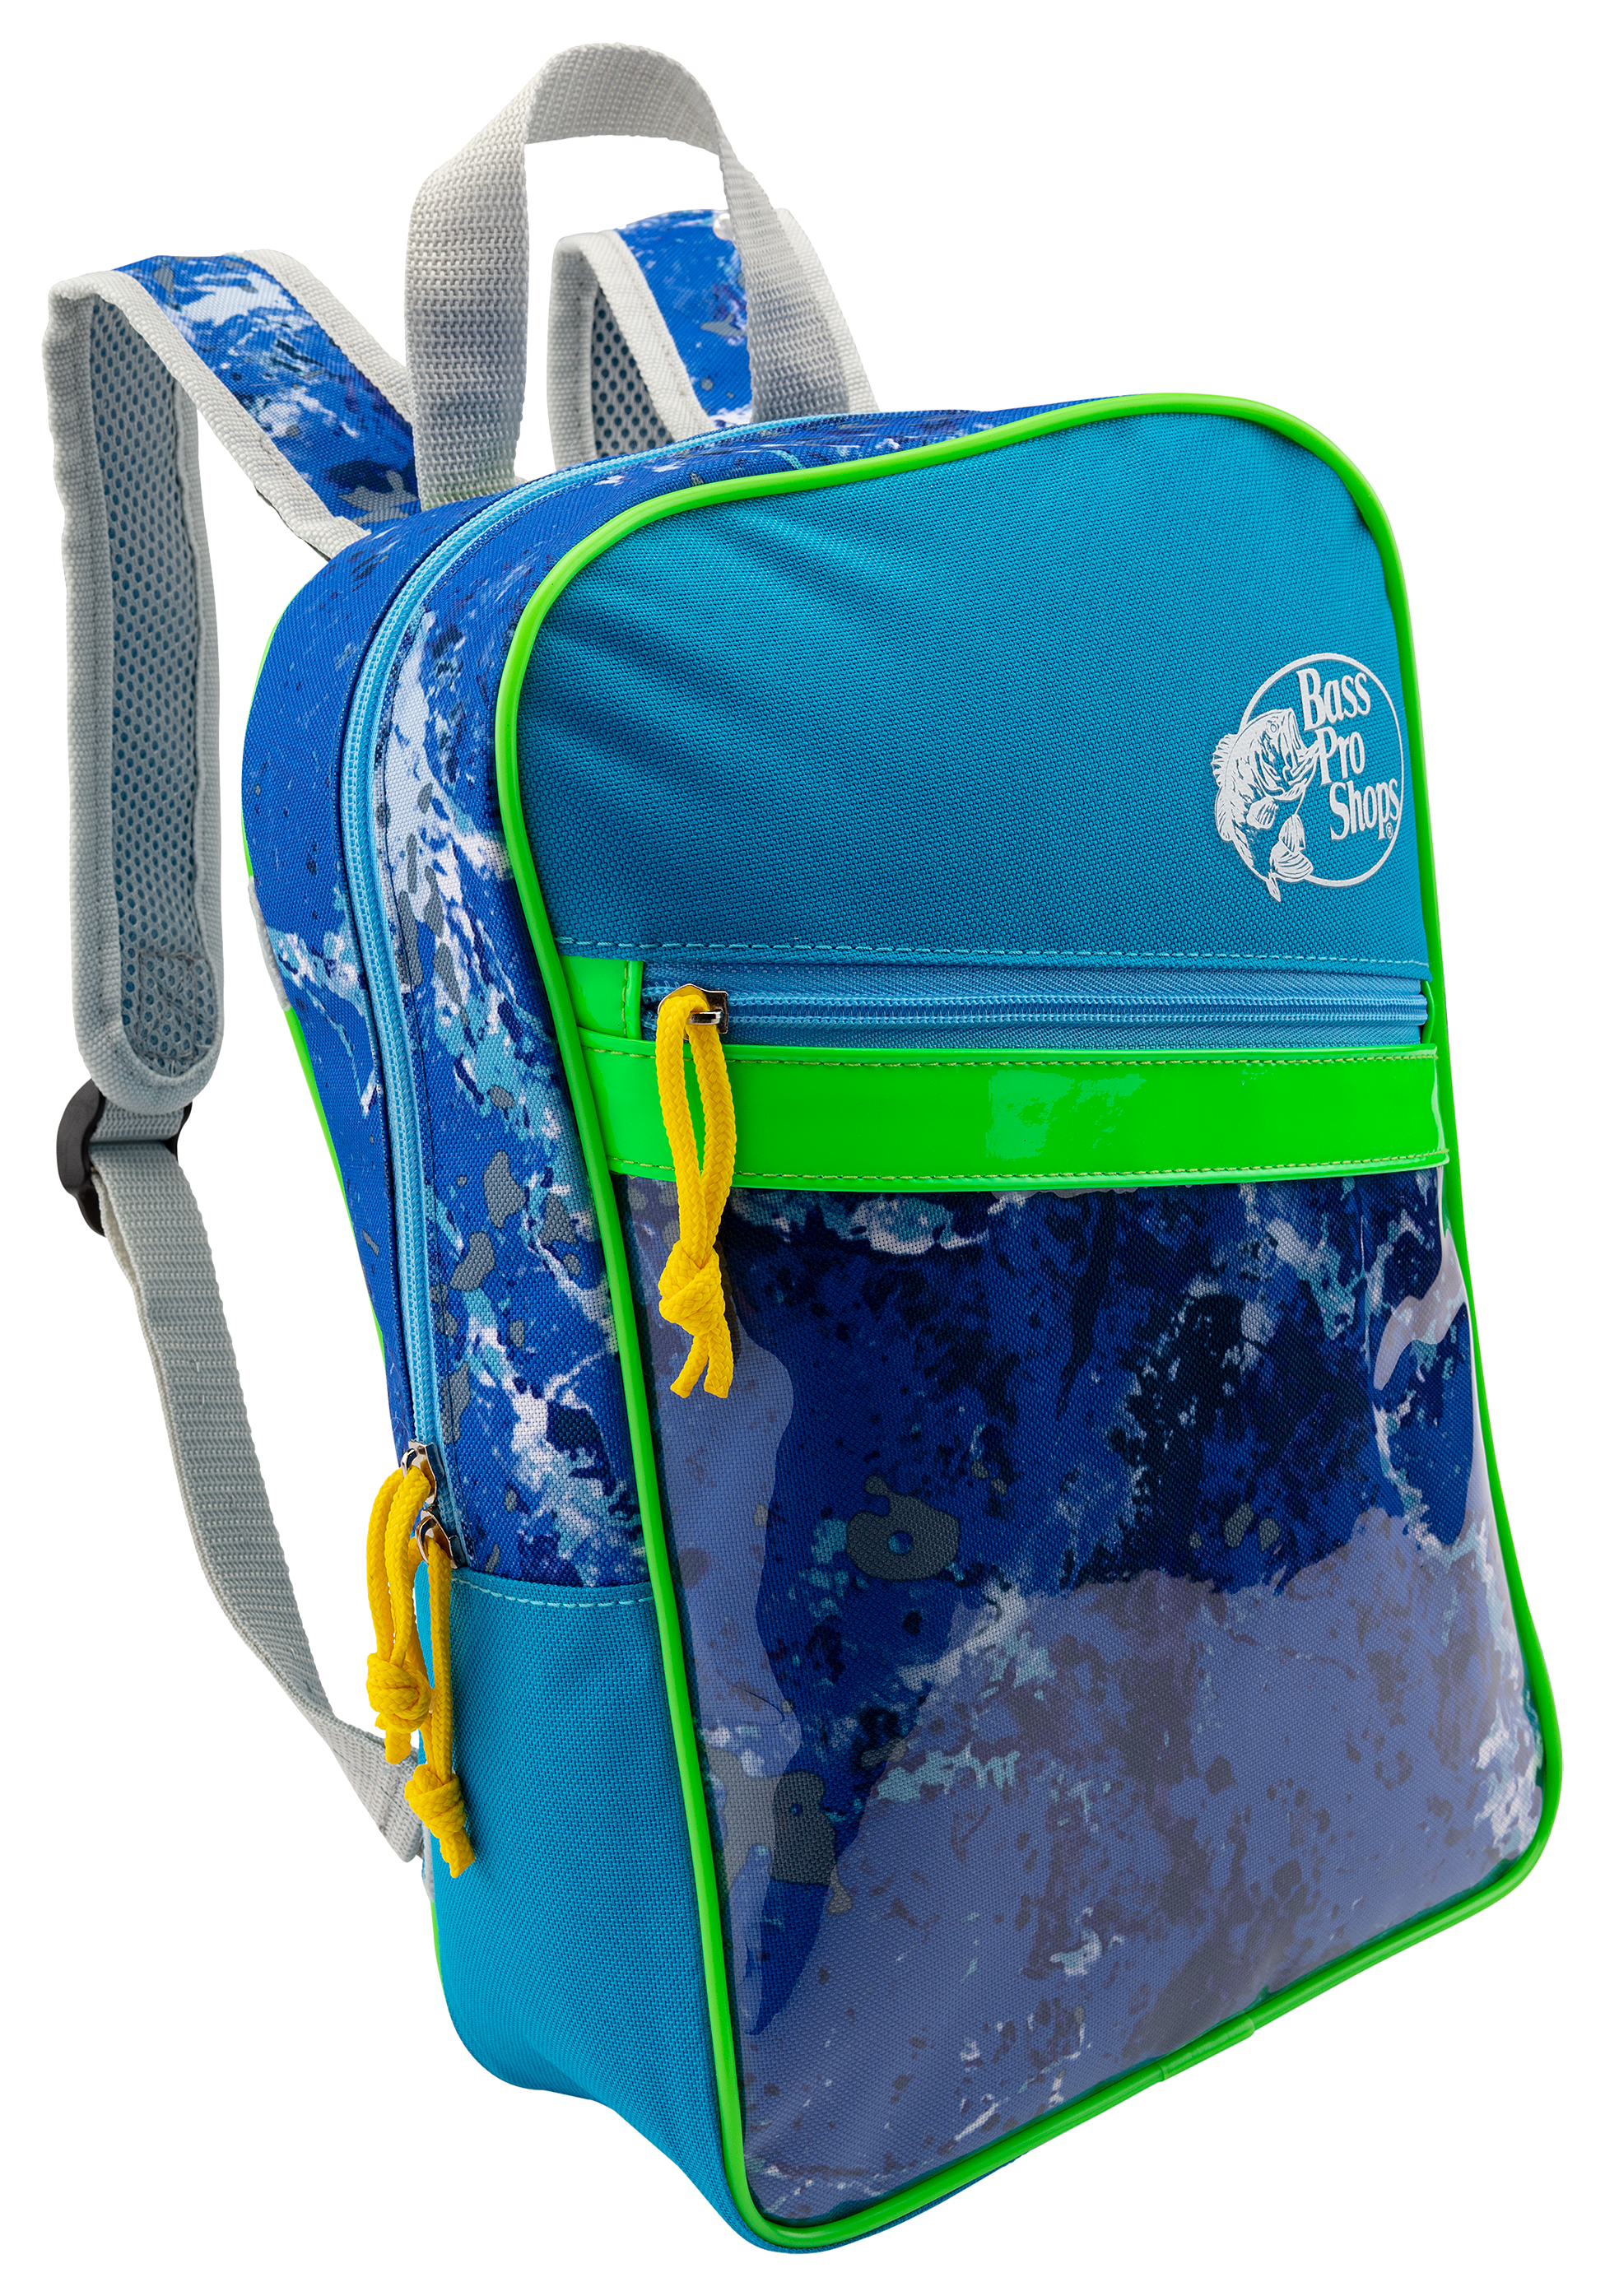 Bass Pro Shops Tackle Backpack 3600 for Kids